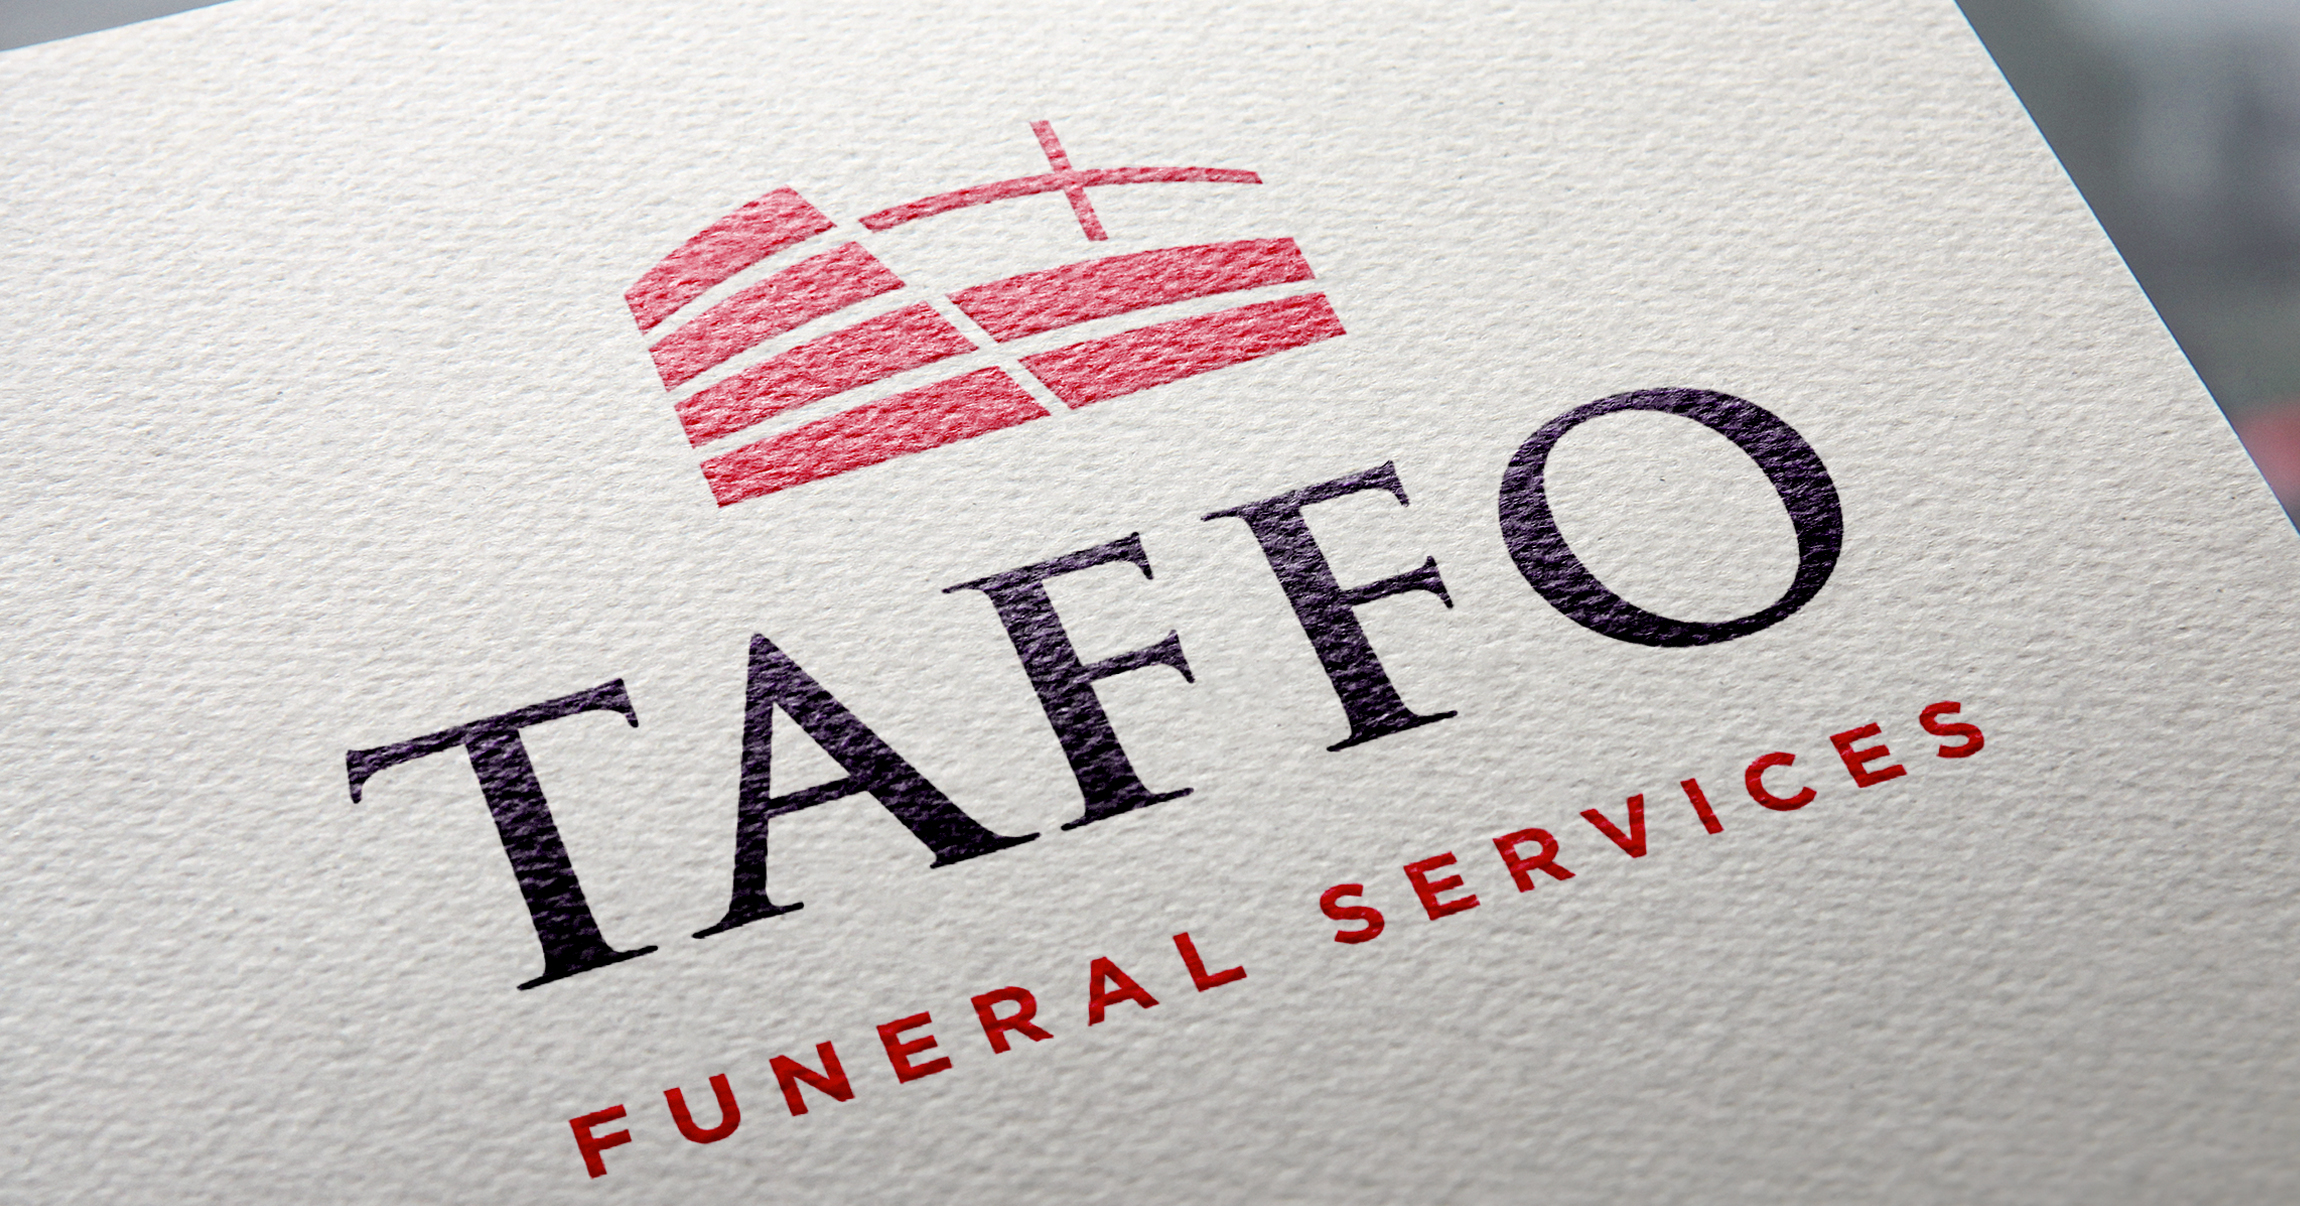 Taffo Funeral Services